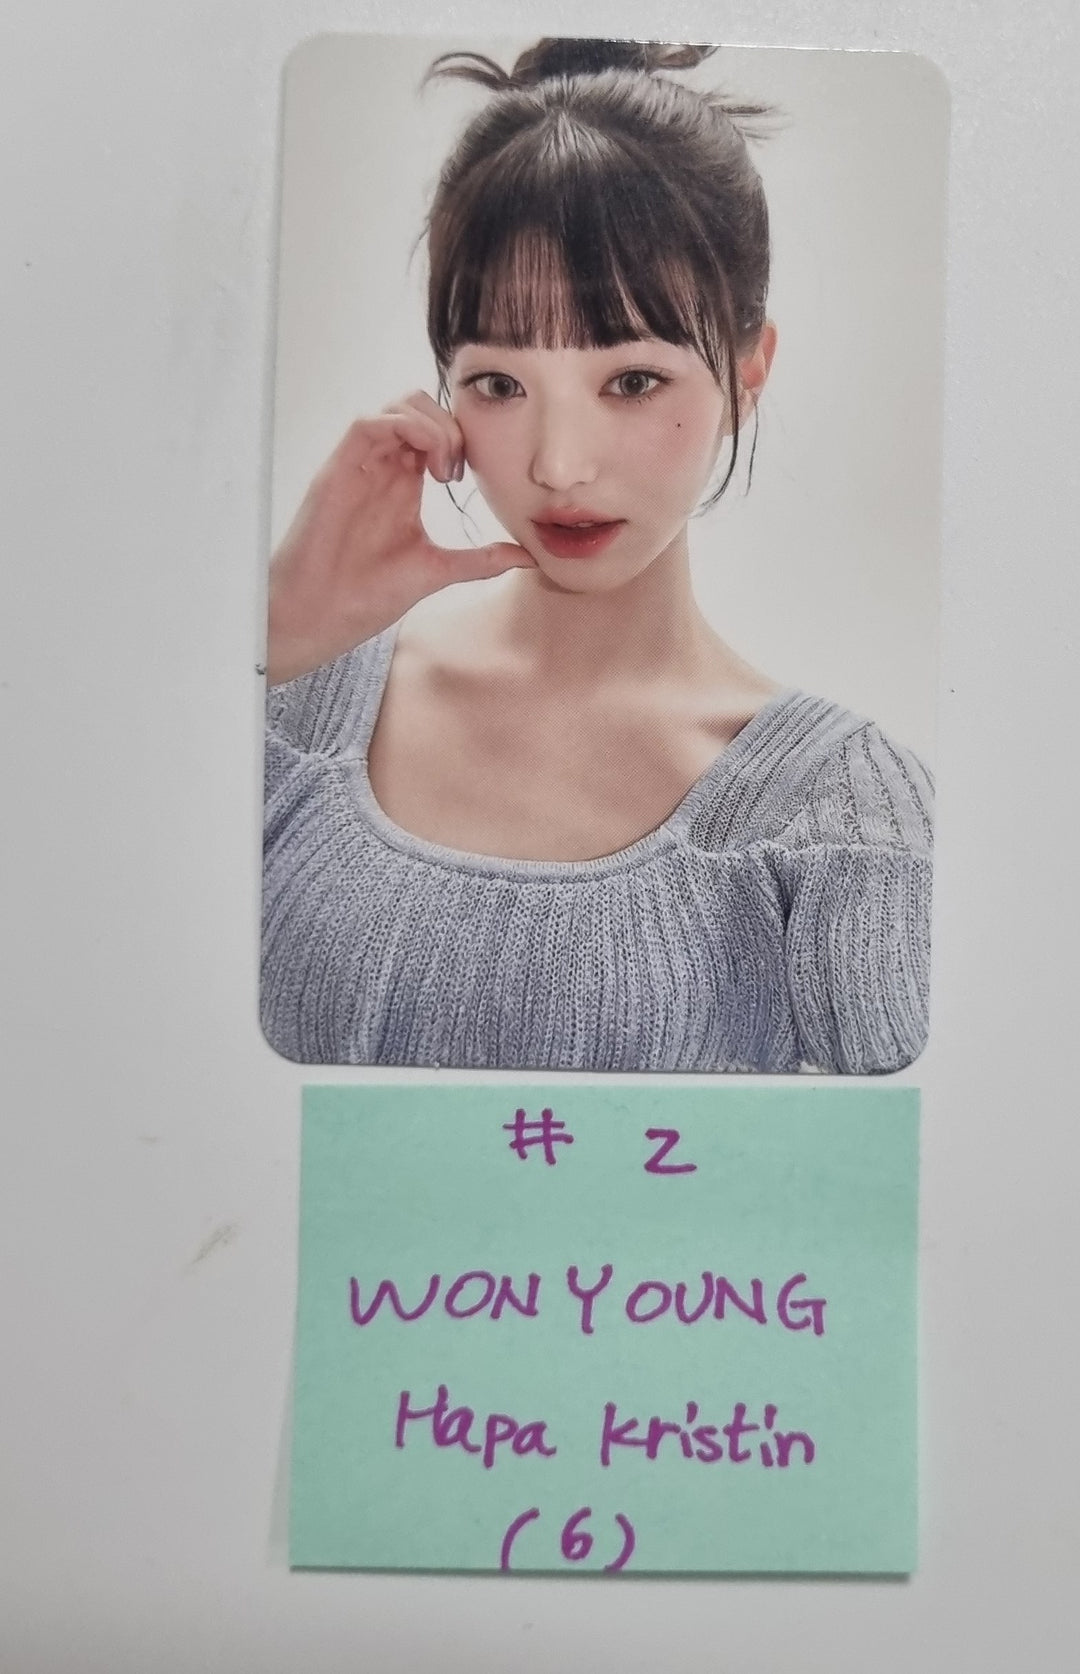 Wonyoung (Of IVE) Hapa X Jang Won Young - Hapa Kristin Event Photocard Ver.5 [24.3.20]